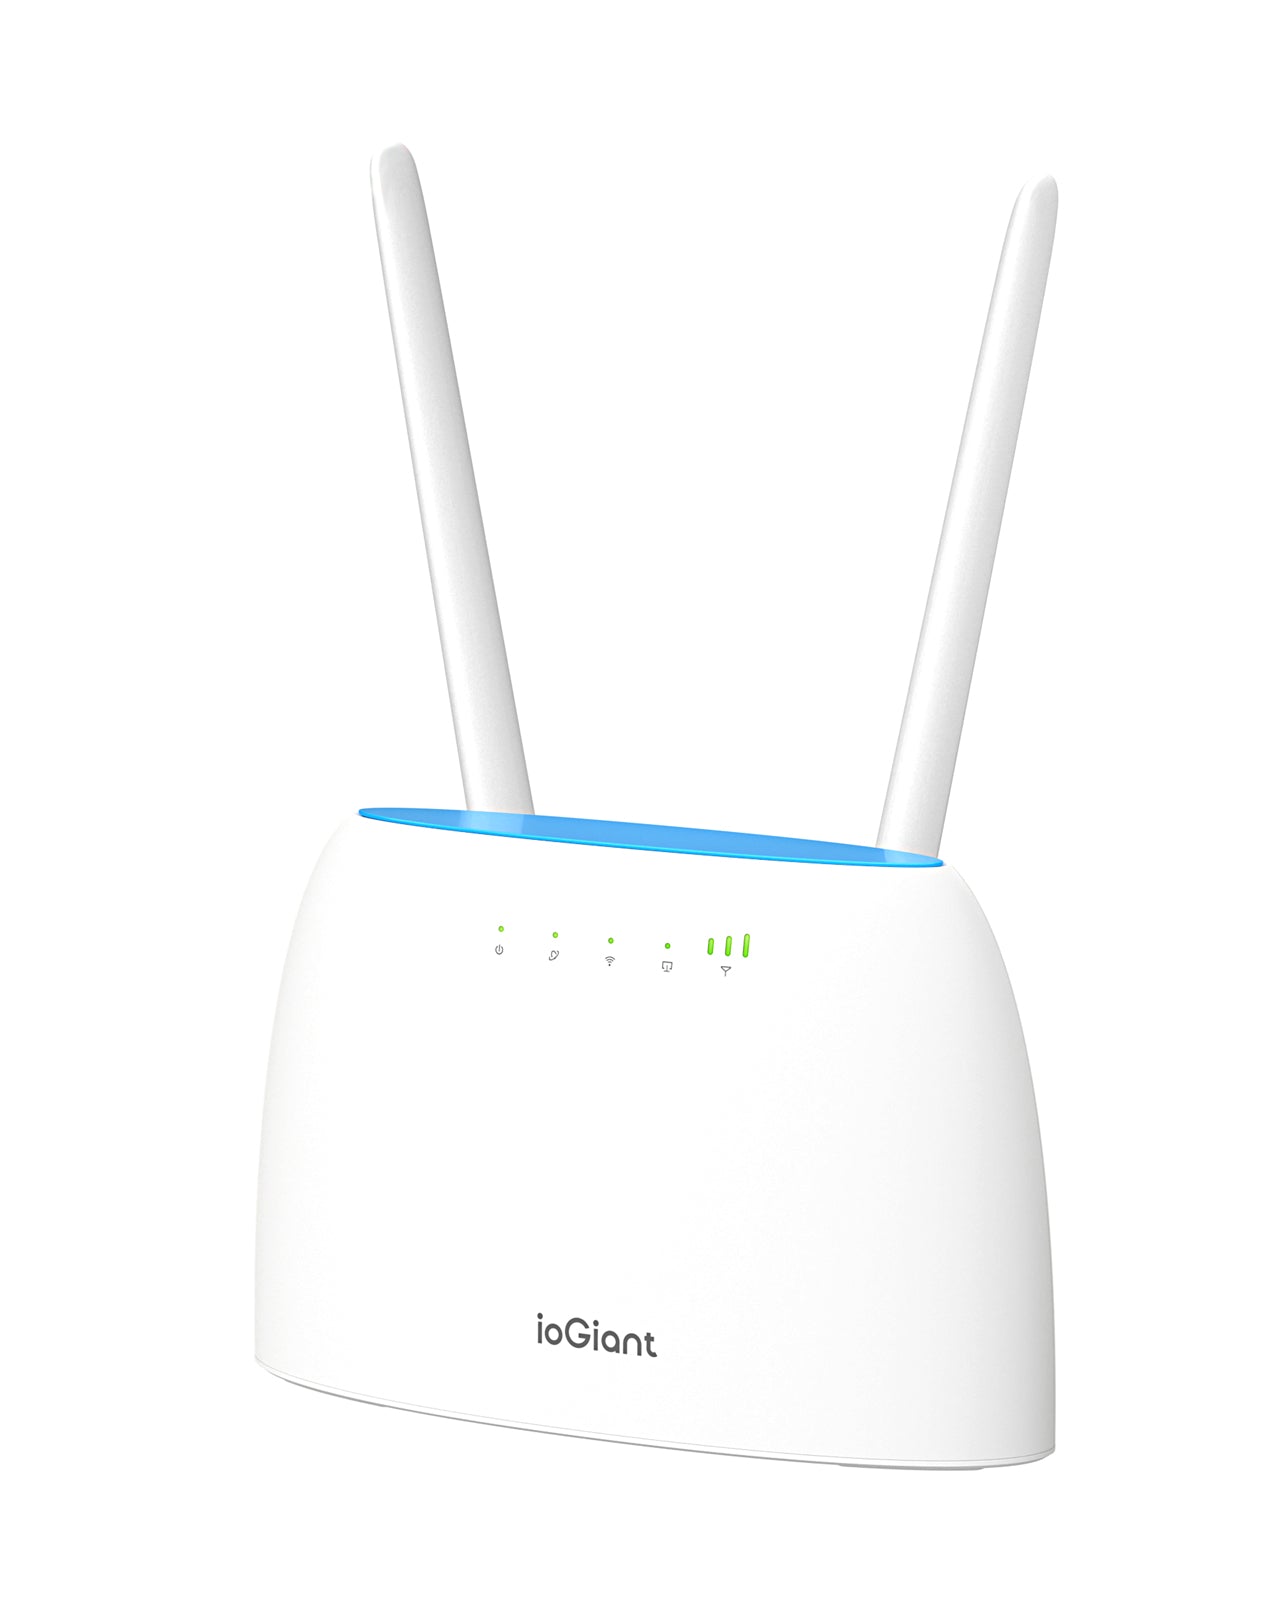 ioGiant 4G LTE router